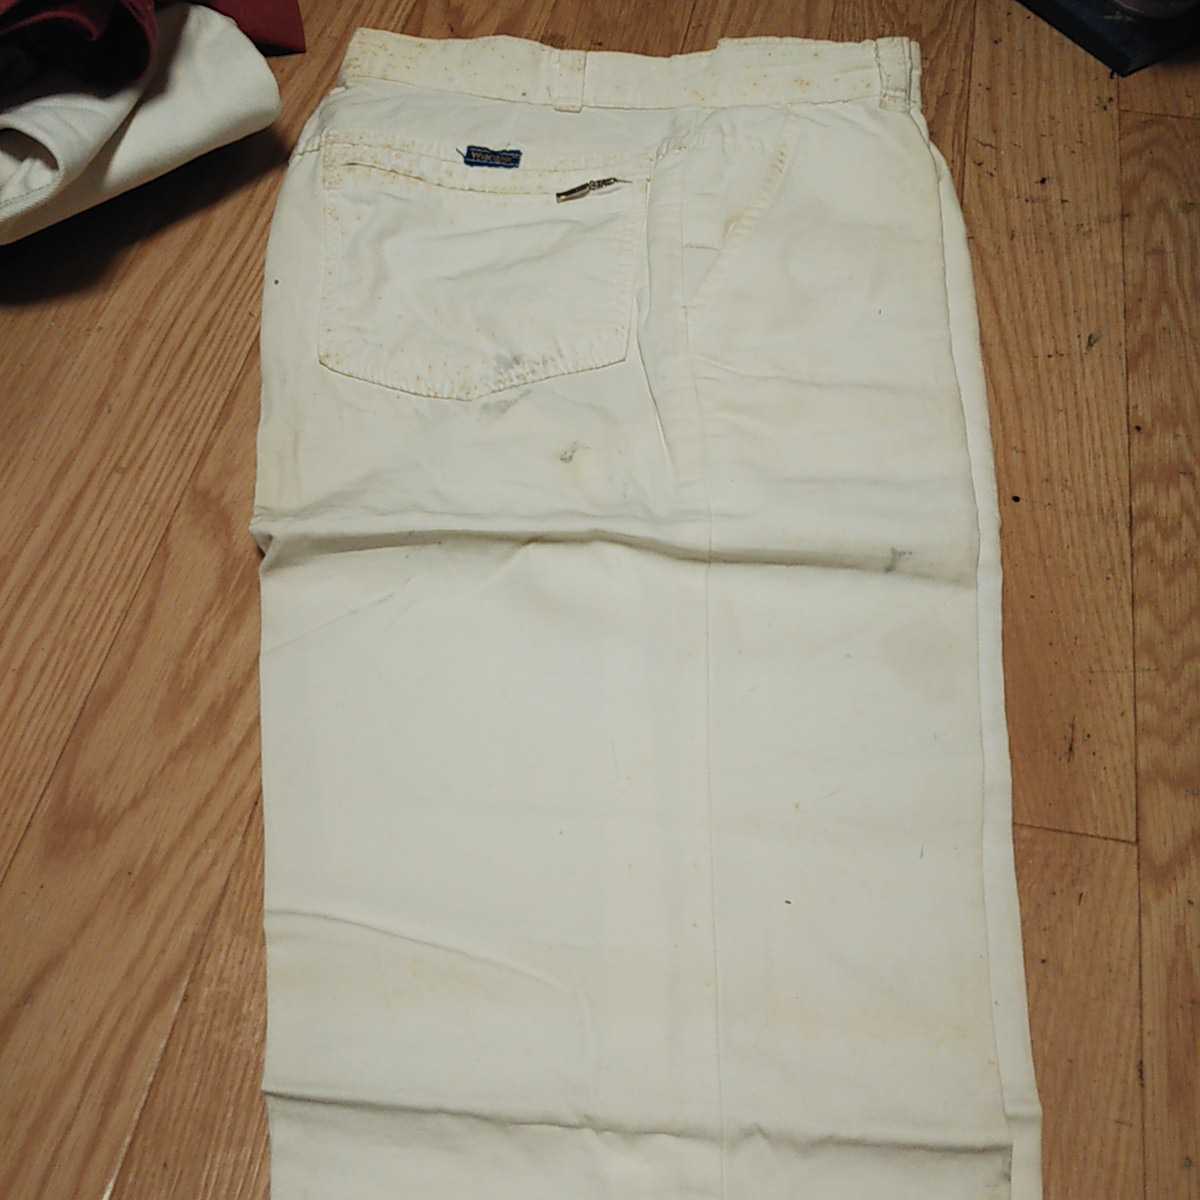  Wrangler jeans Wrangler part shop put on working clothes optimum DIY direction cotton 100% white pants painting large . work 